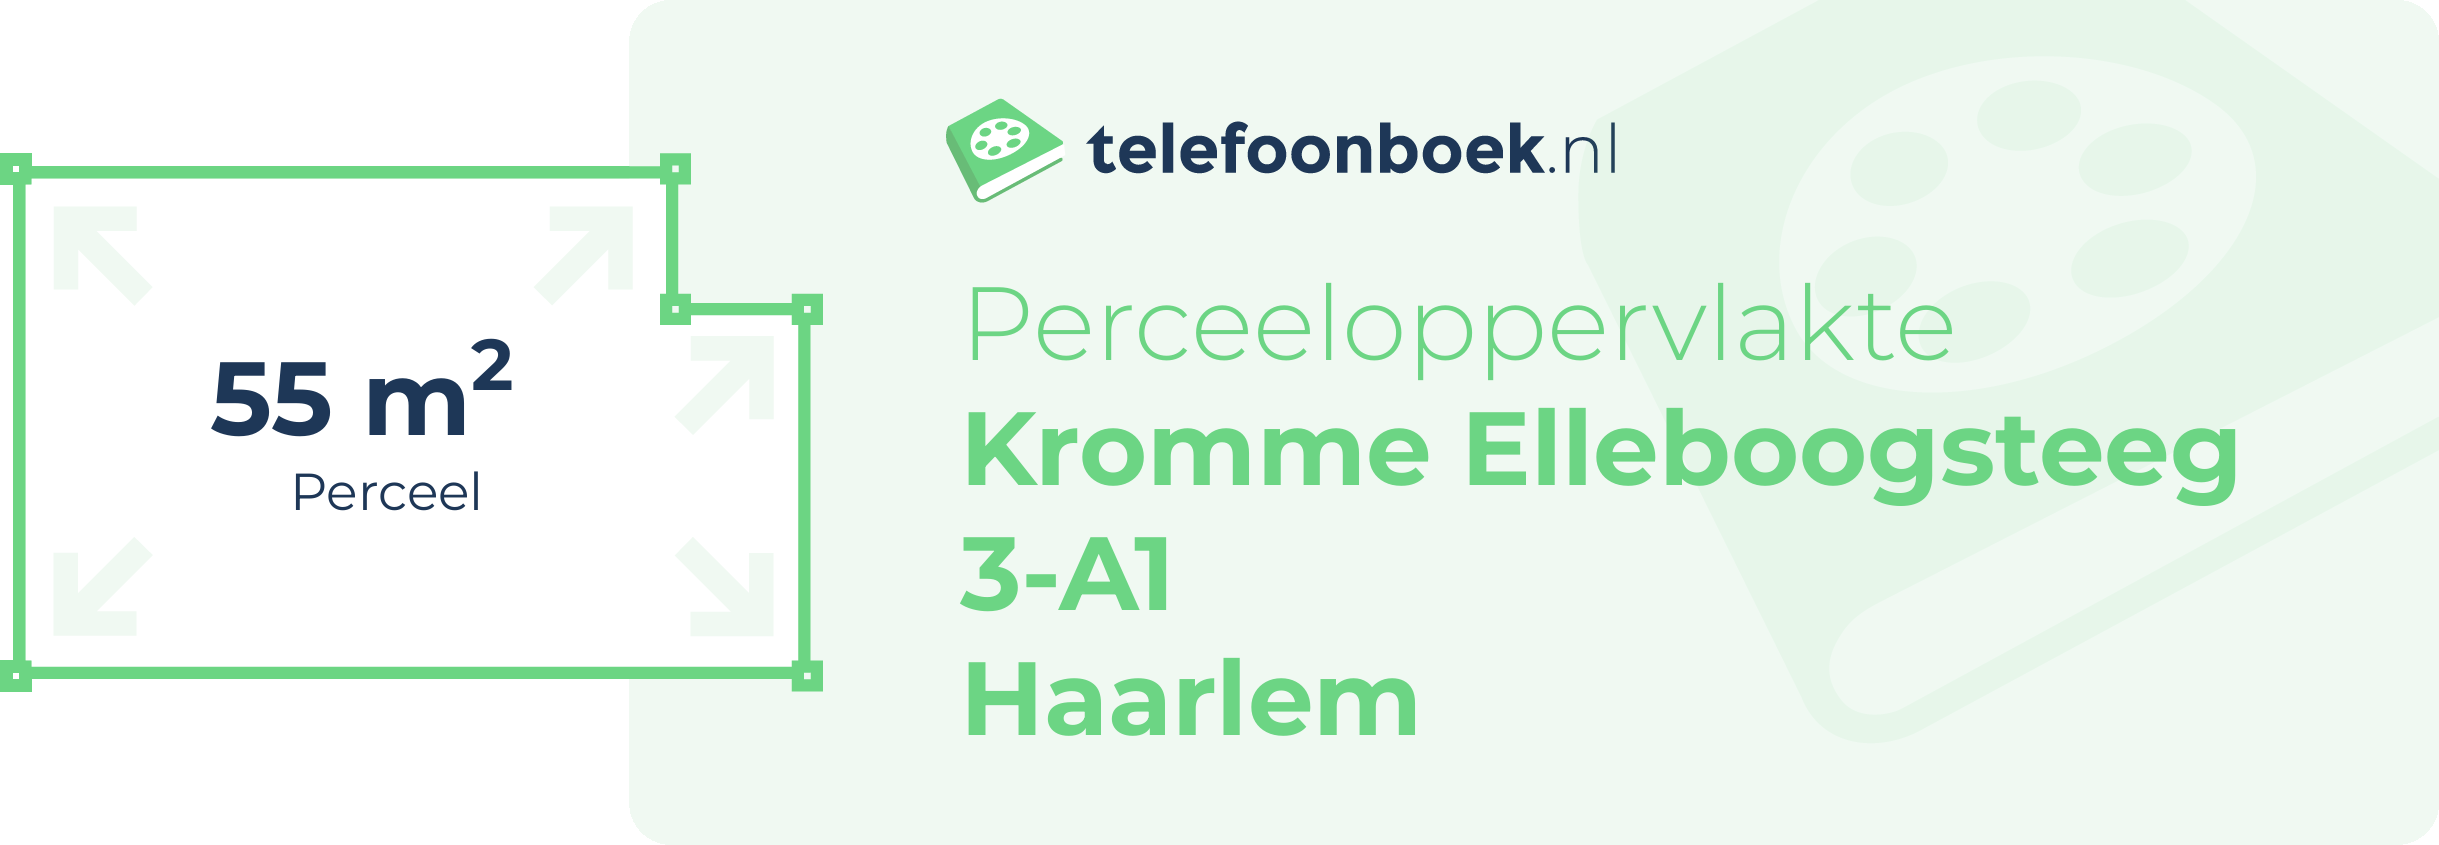 Perceeloppervlakte Kromme Elleboogsteeg 3-A1 Haarlem